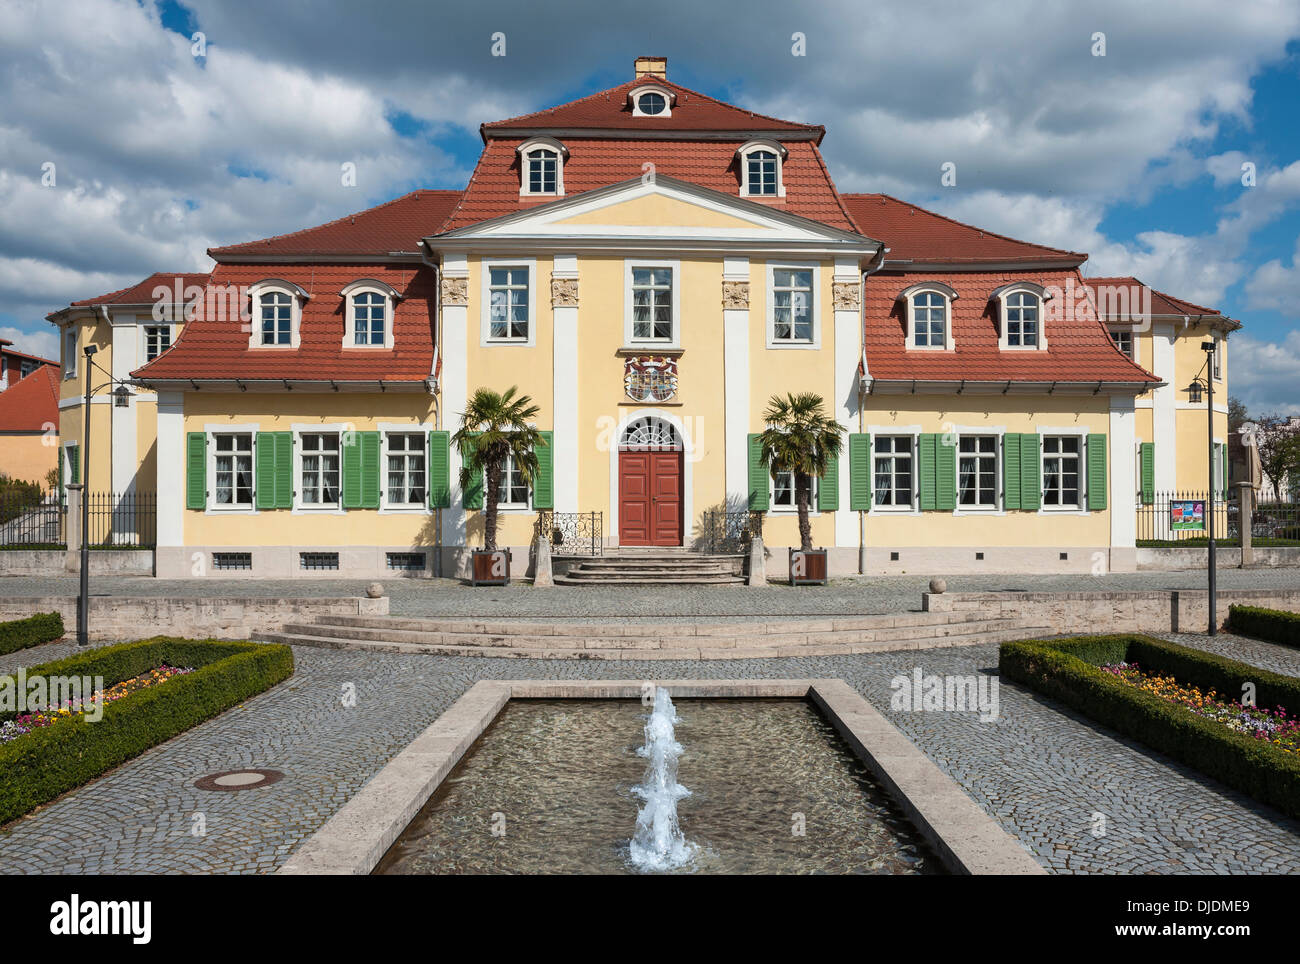 Friederikenschlösschen Burg, Spätbarock Sommer Palast, 1750, Bad Langensalza, Thüringen, Deutschland Stockfoto